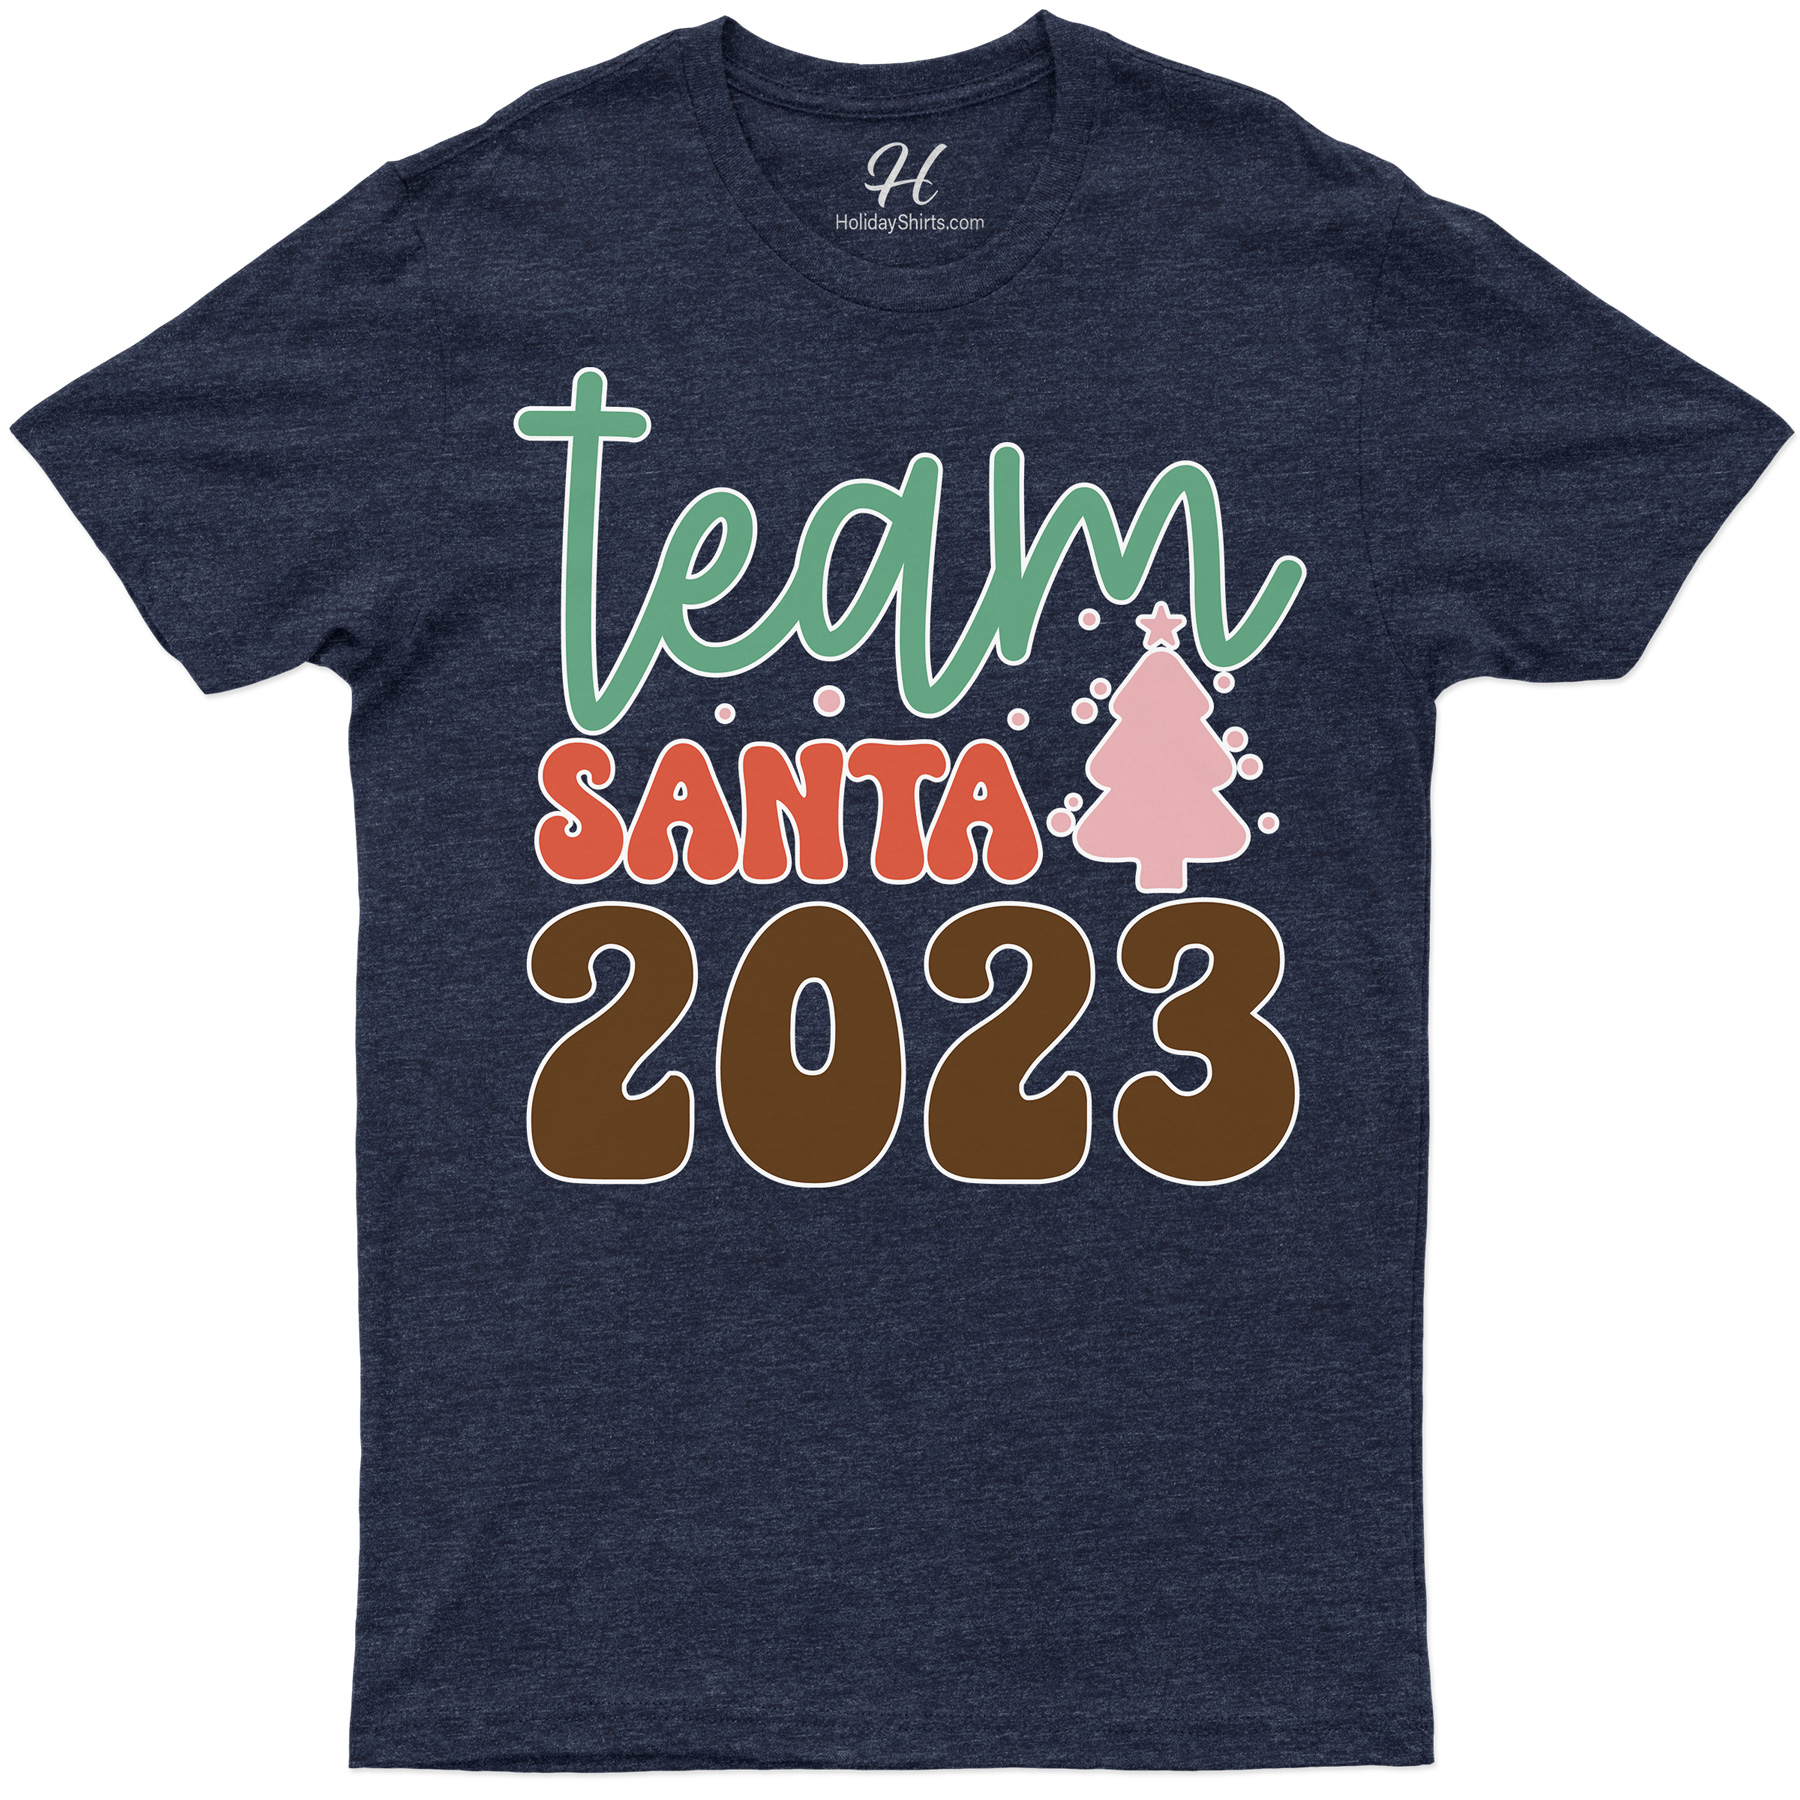 Team Santa 2023 - Festive Holiday Tee By Holidayshirts